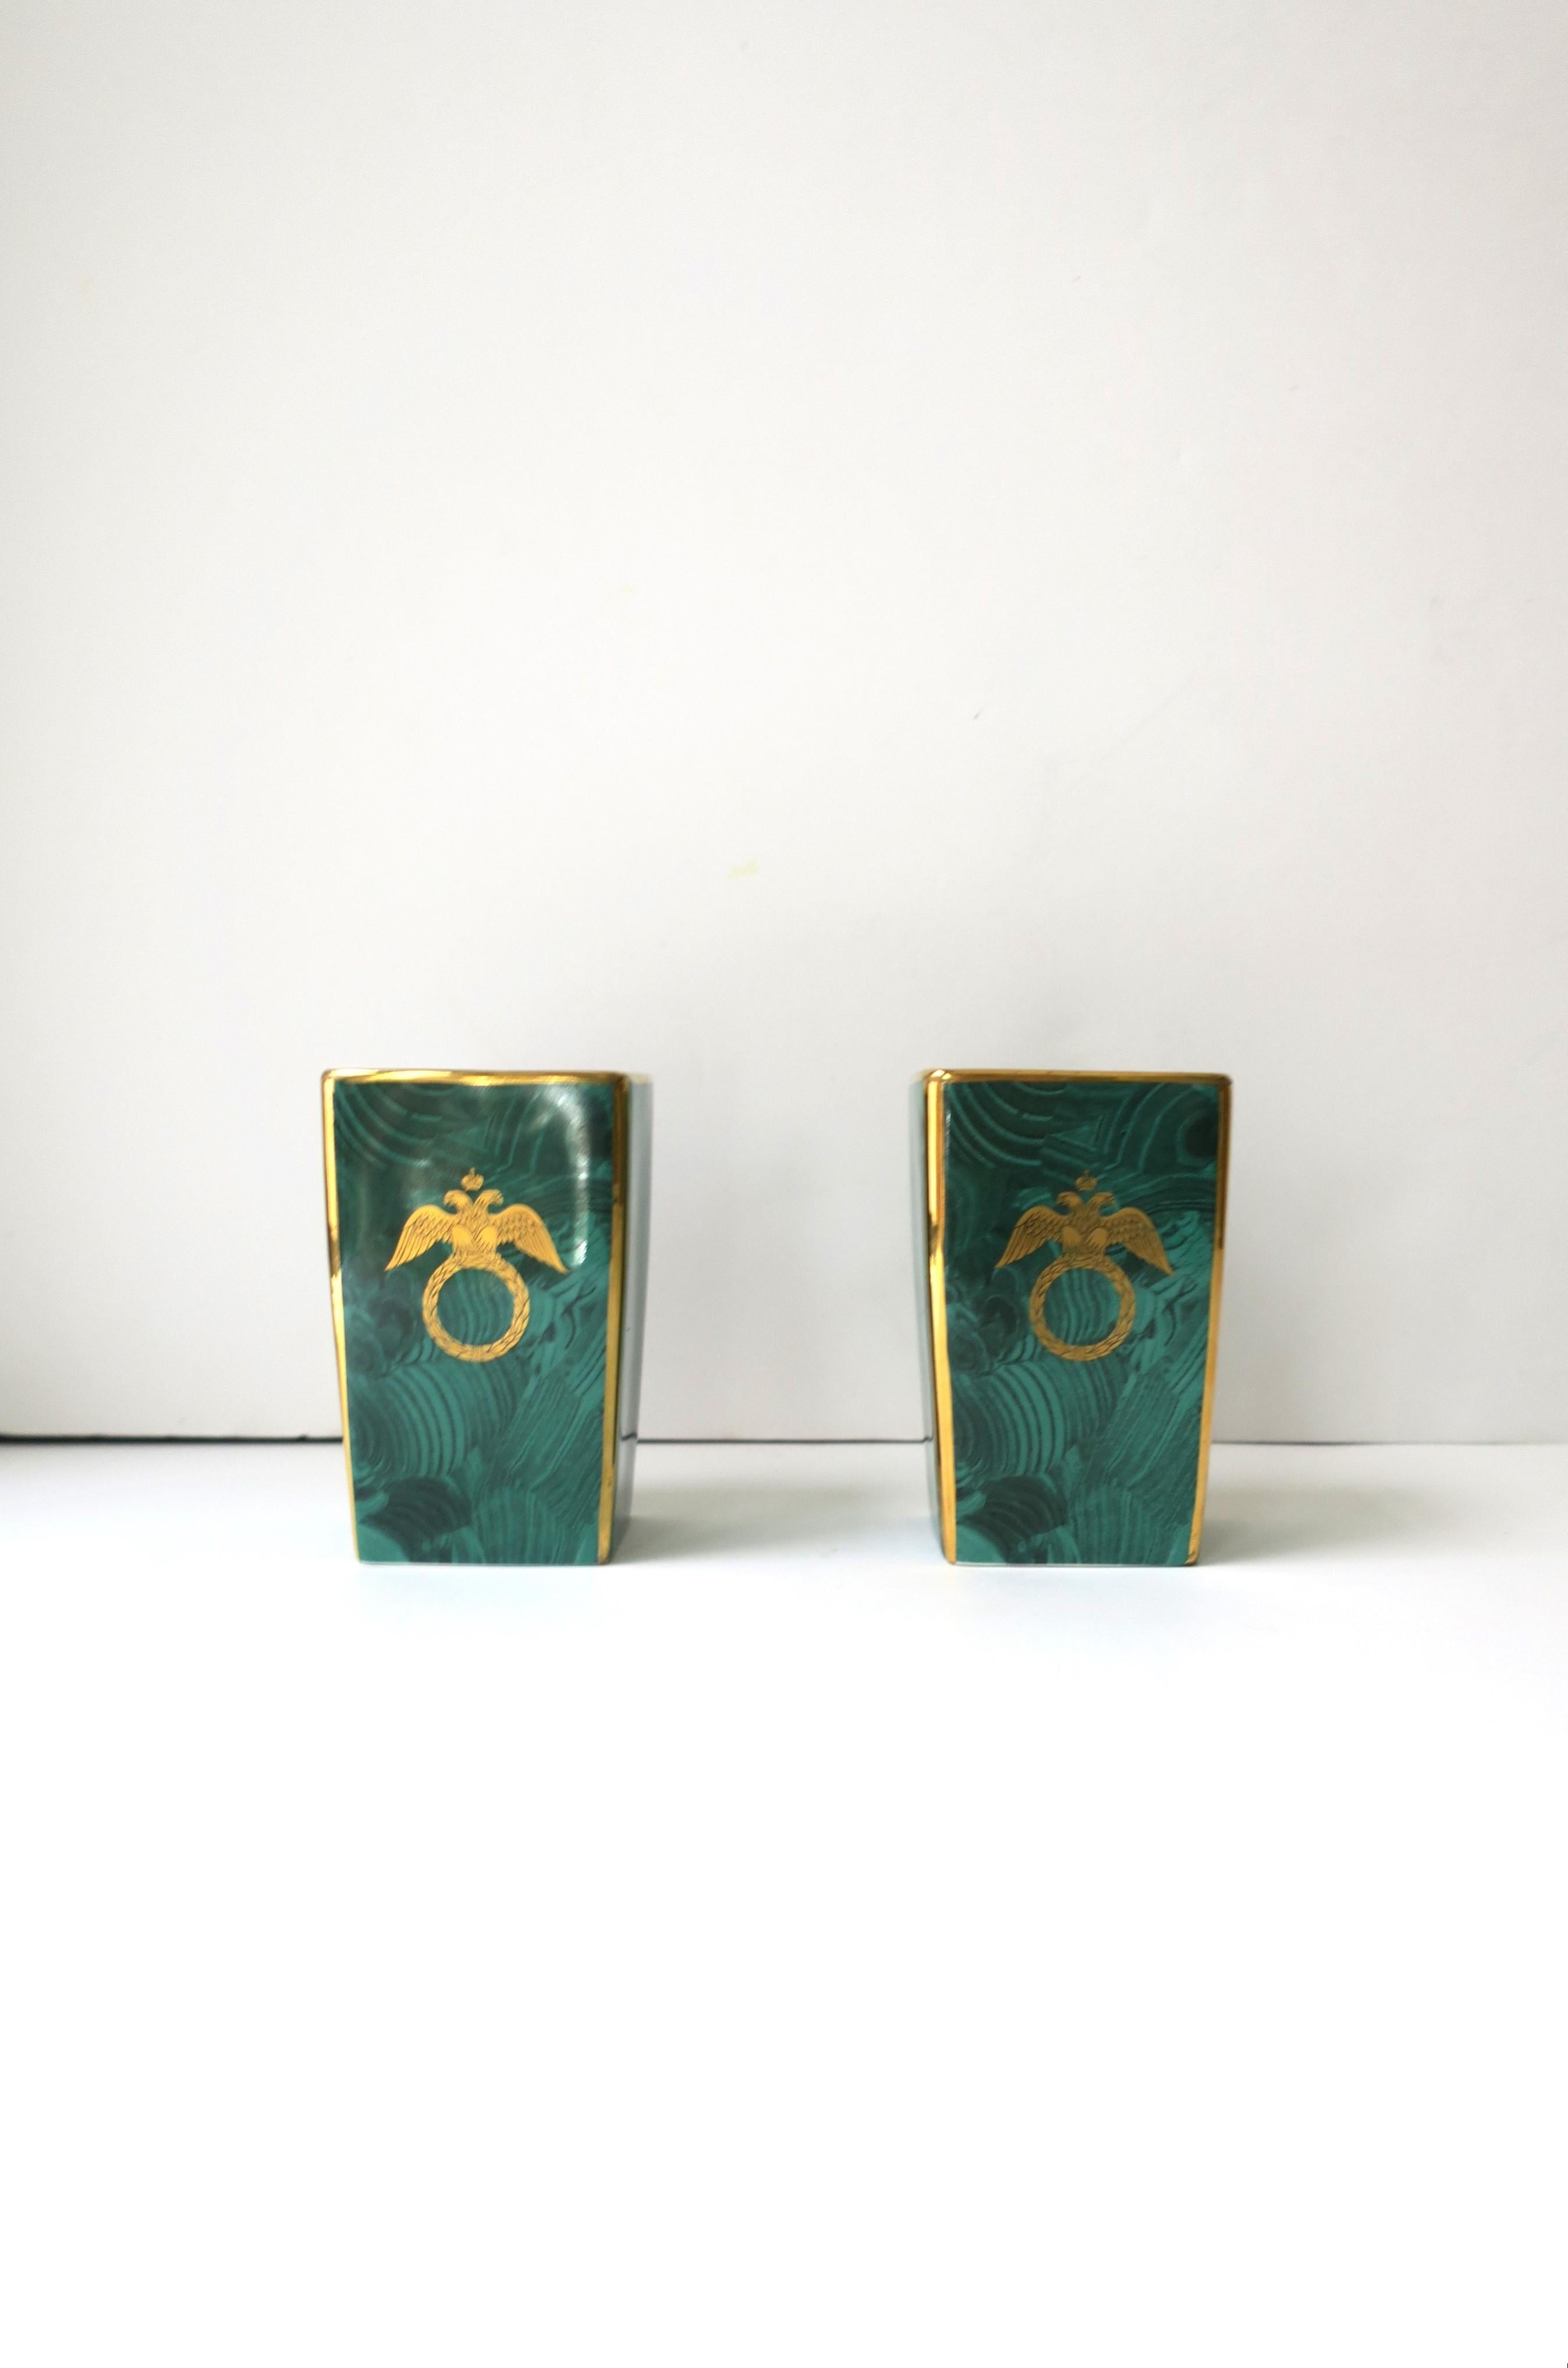 Malachite and Gold Porcelain Desk Pen or Vanity Holders, or Vases, England, Pair 1